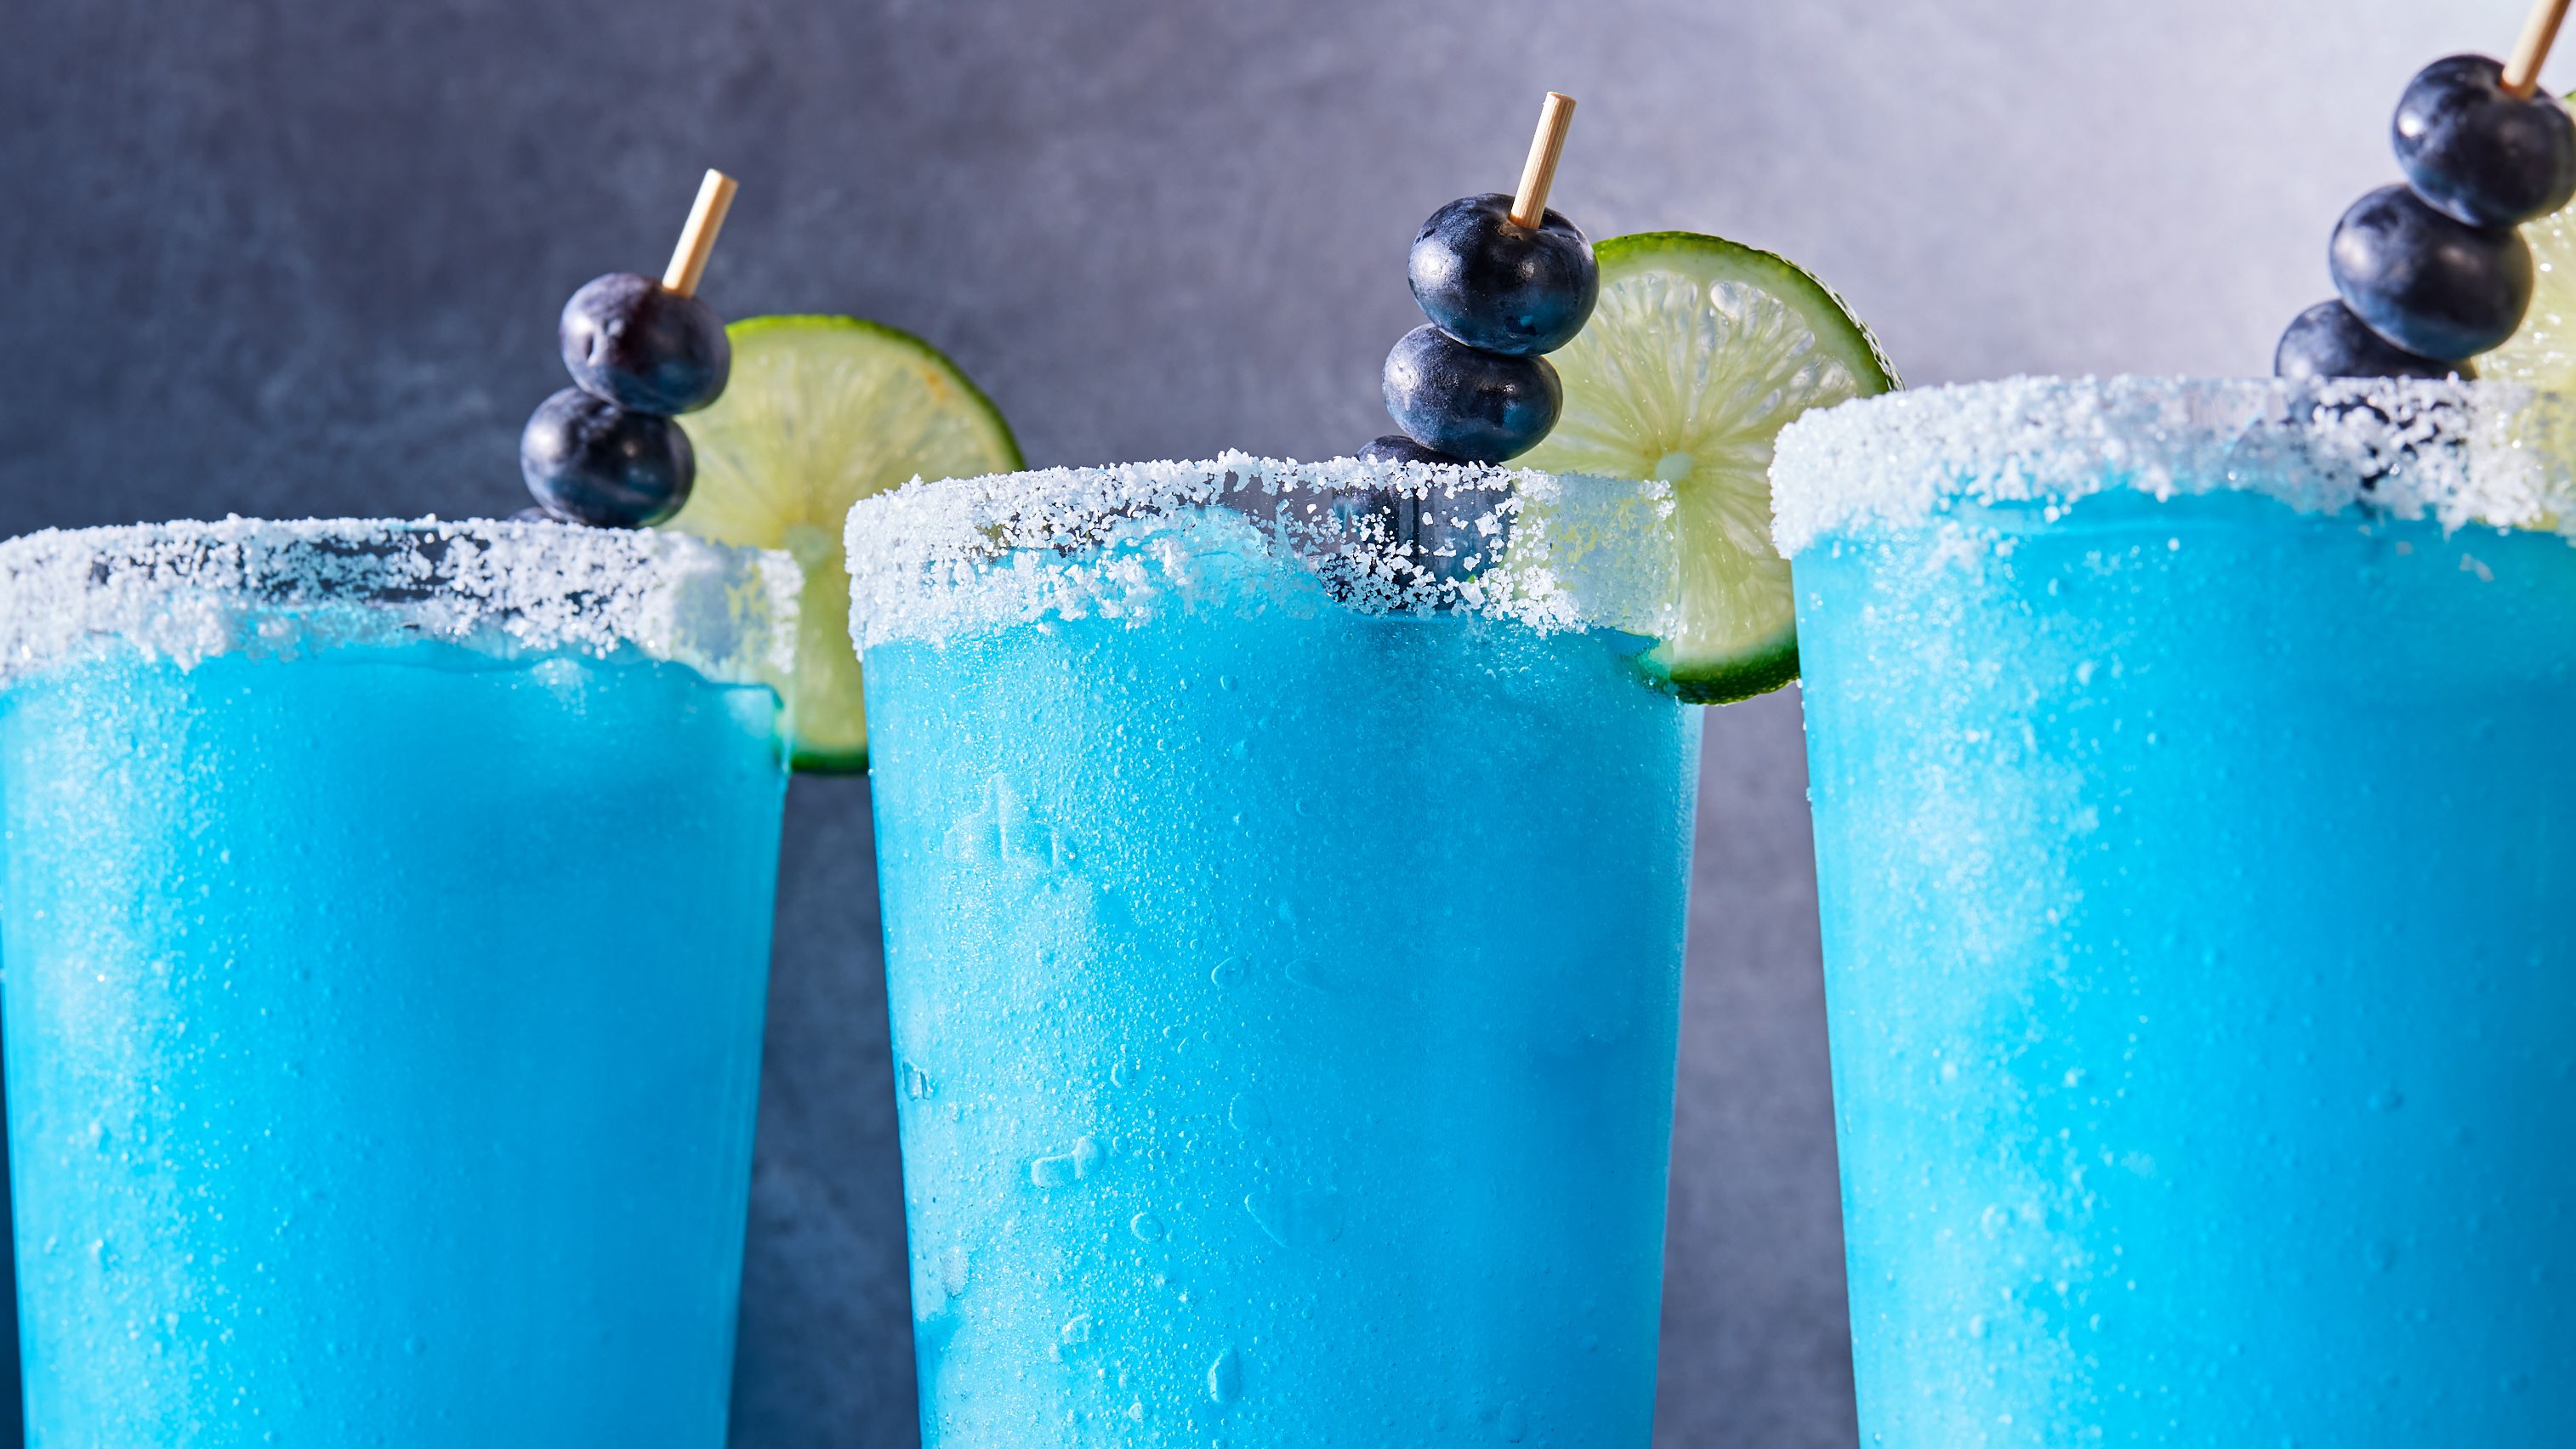 Best Blue Margaritas Recipe - How To Make Frozen Blue Moscato Margaritas